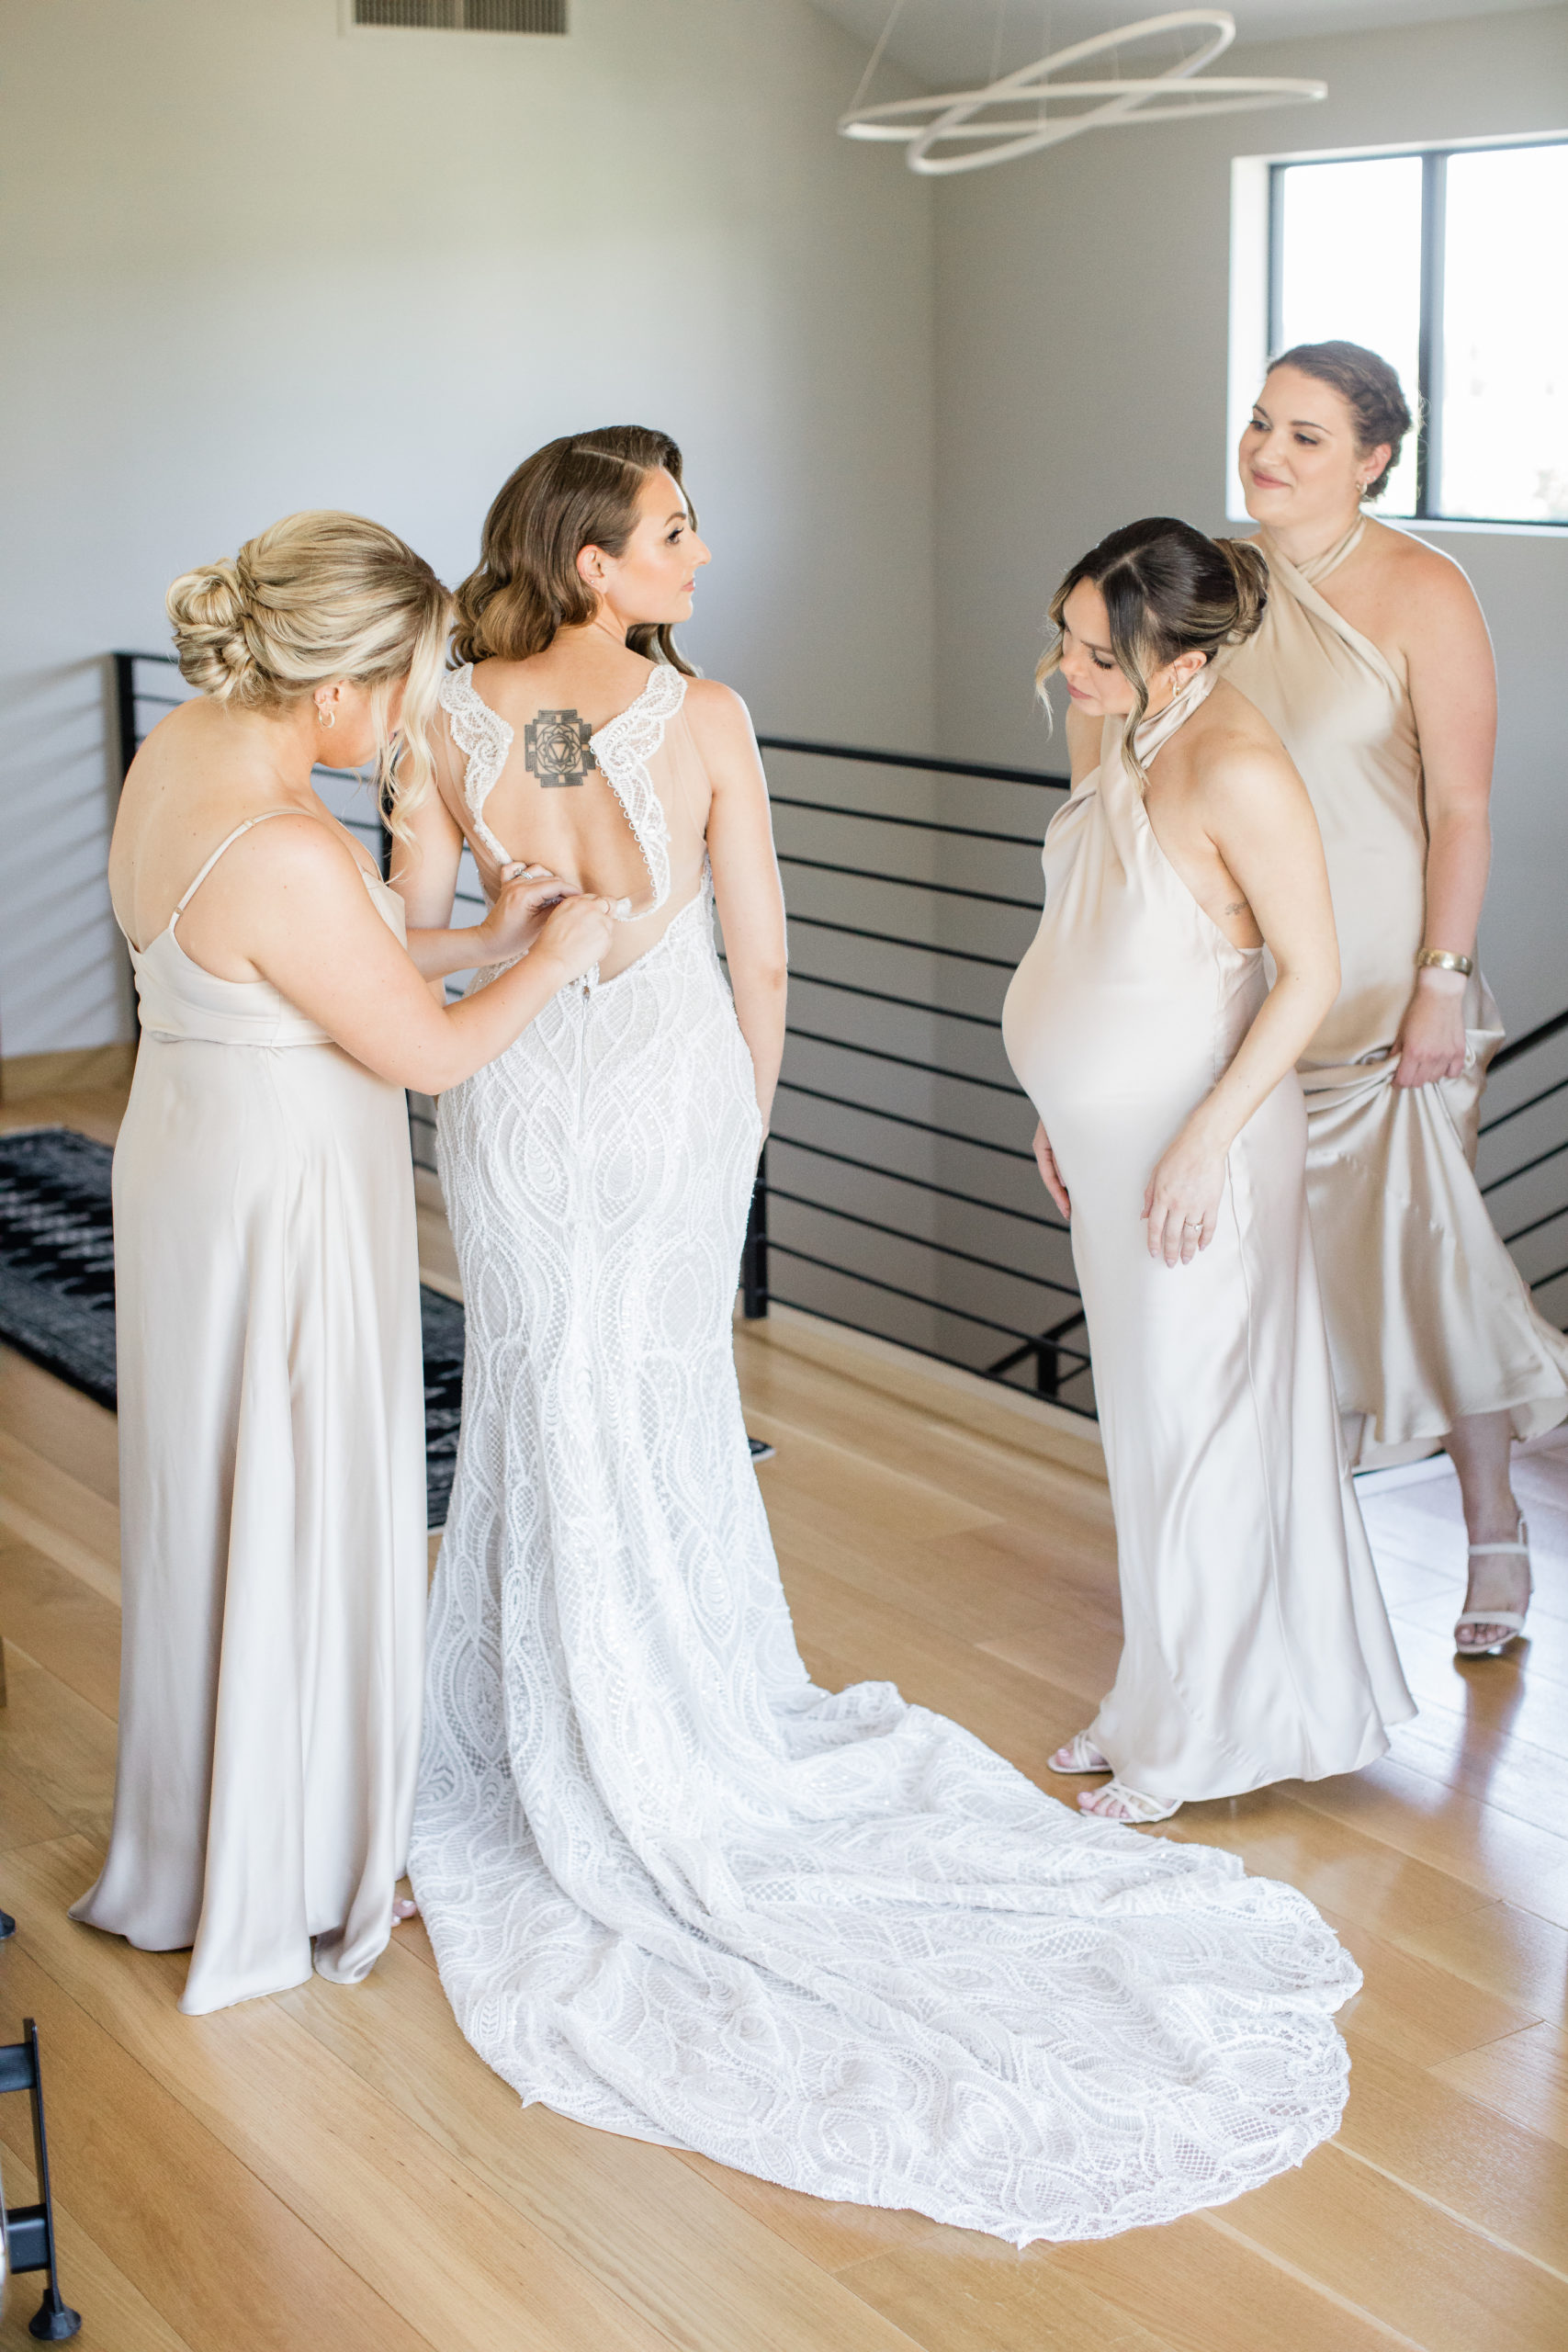 Tara's three bridesmaids helping to button up her wedding dress.